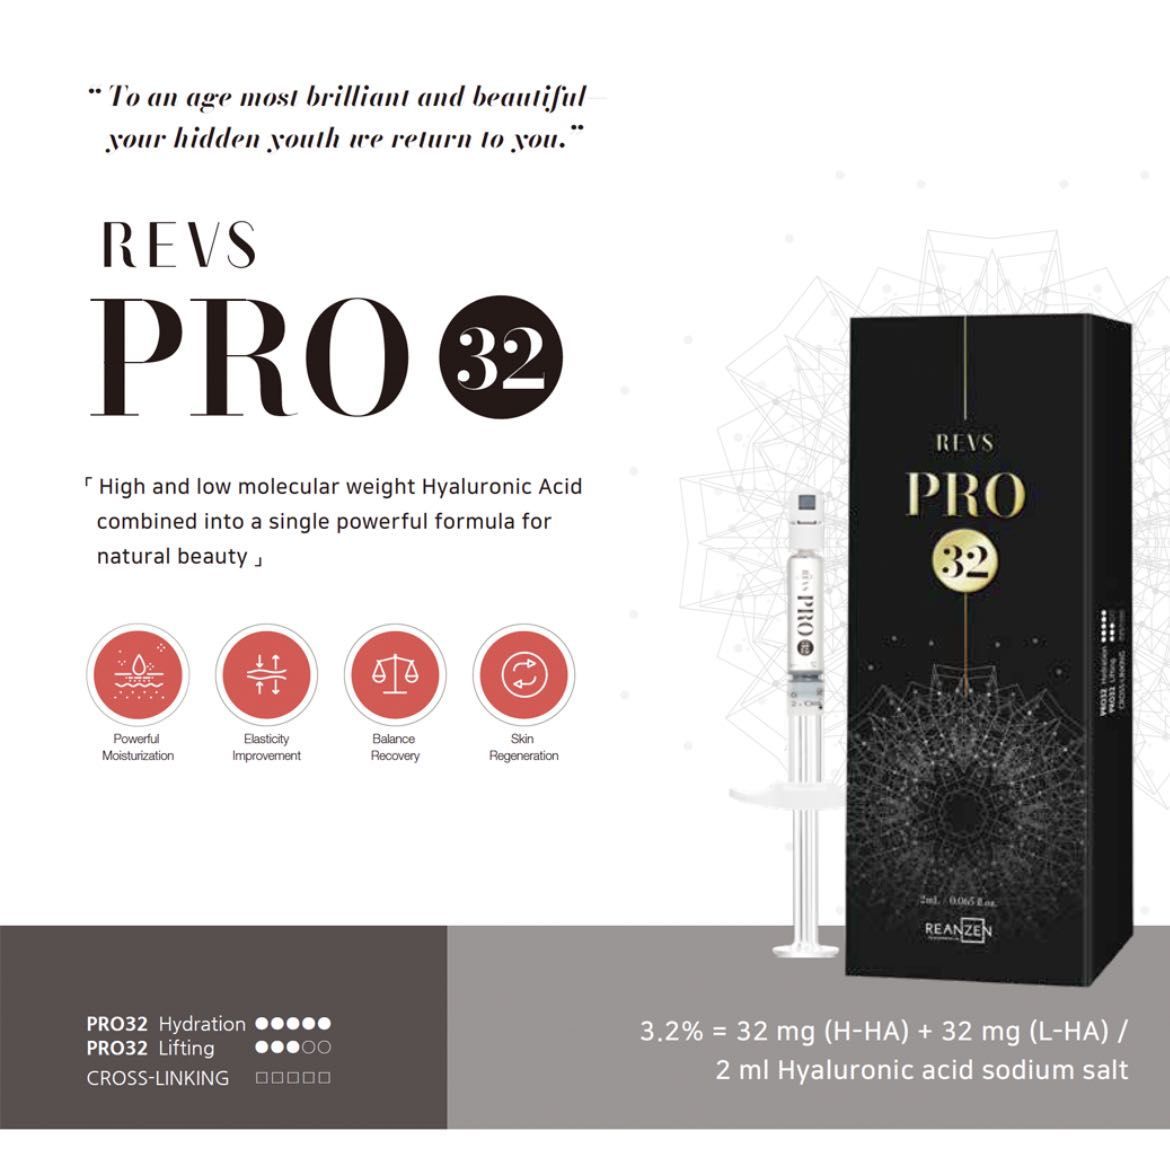 REVs PRO 32 Skin Booster no portfolio